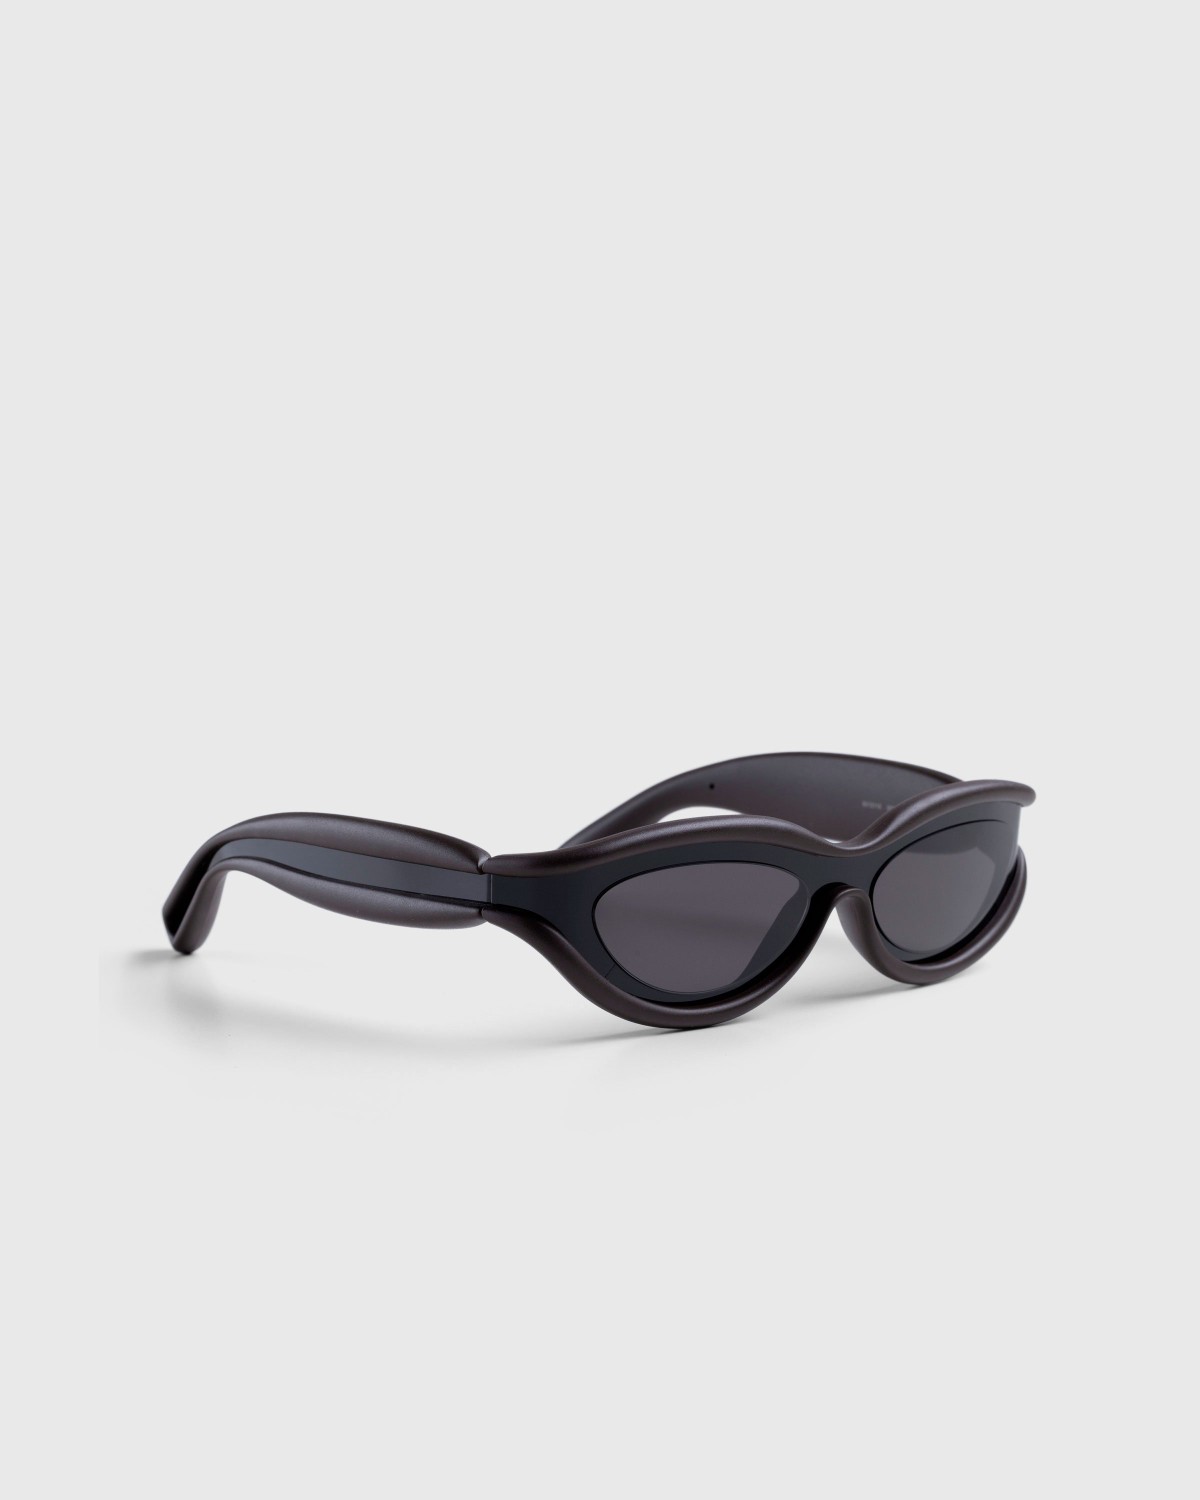 Bottega Veneta – Unapologetic Sunglasses Black | Highsnobiety Shop